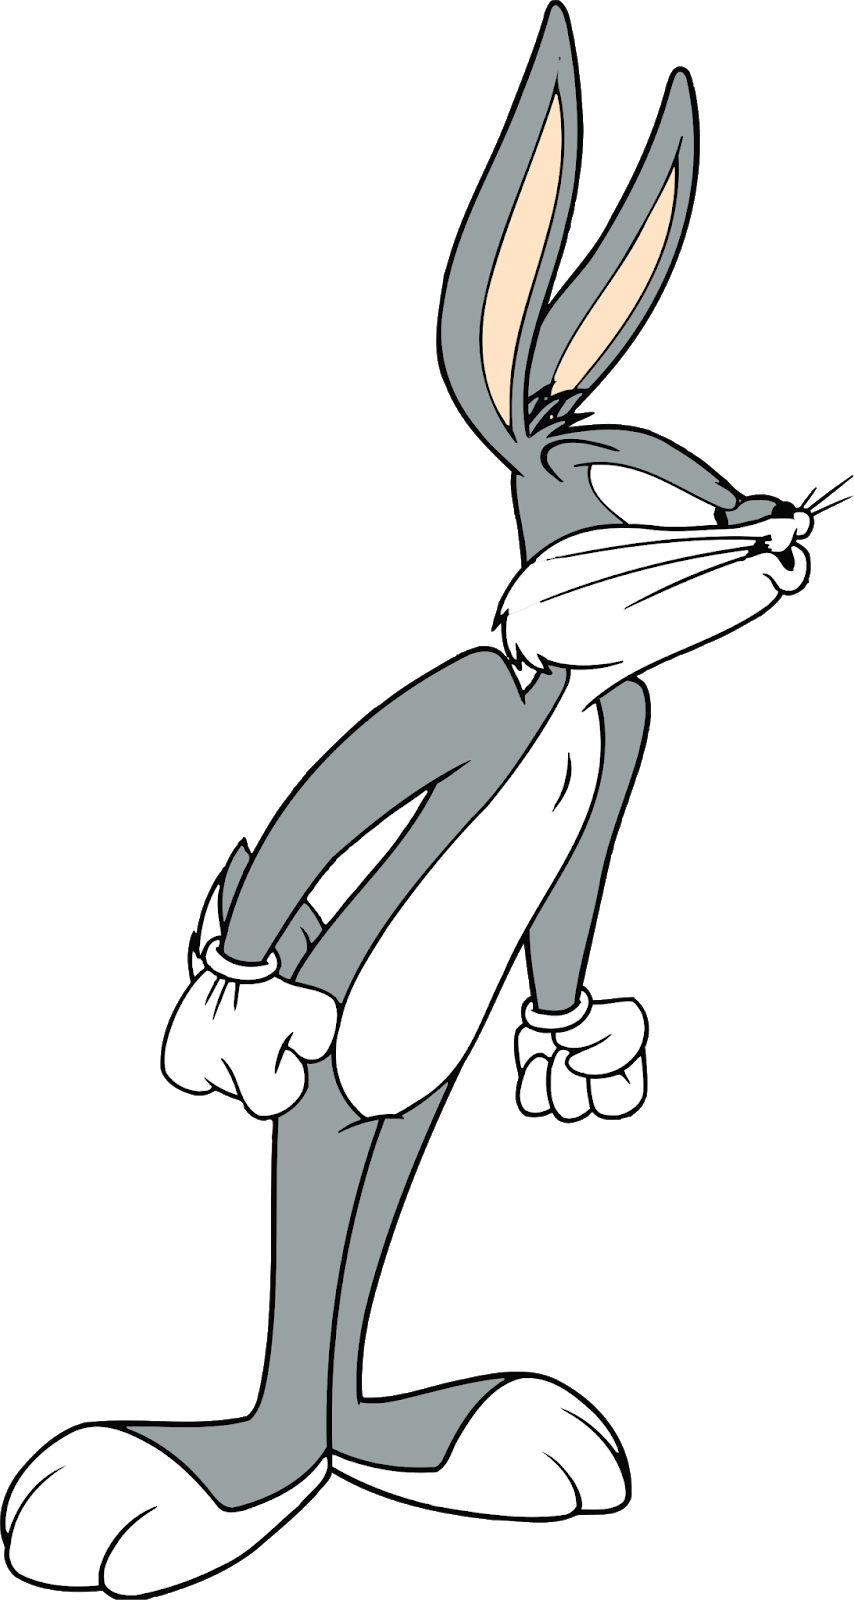 Bugs Bunny Characters, Bugs Bunny Cartoon Characters, - Bugs Bunny Clip...